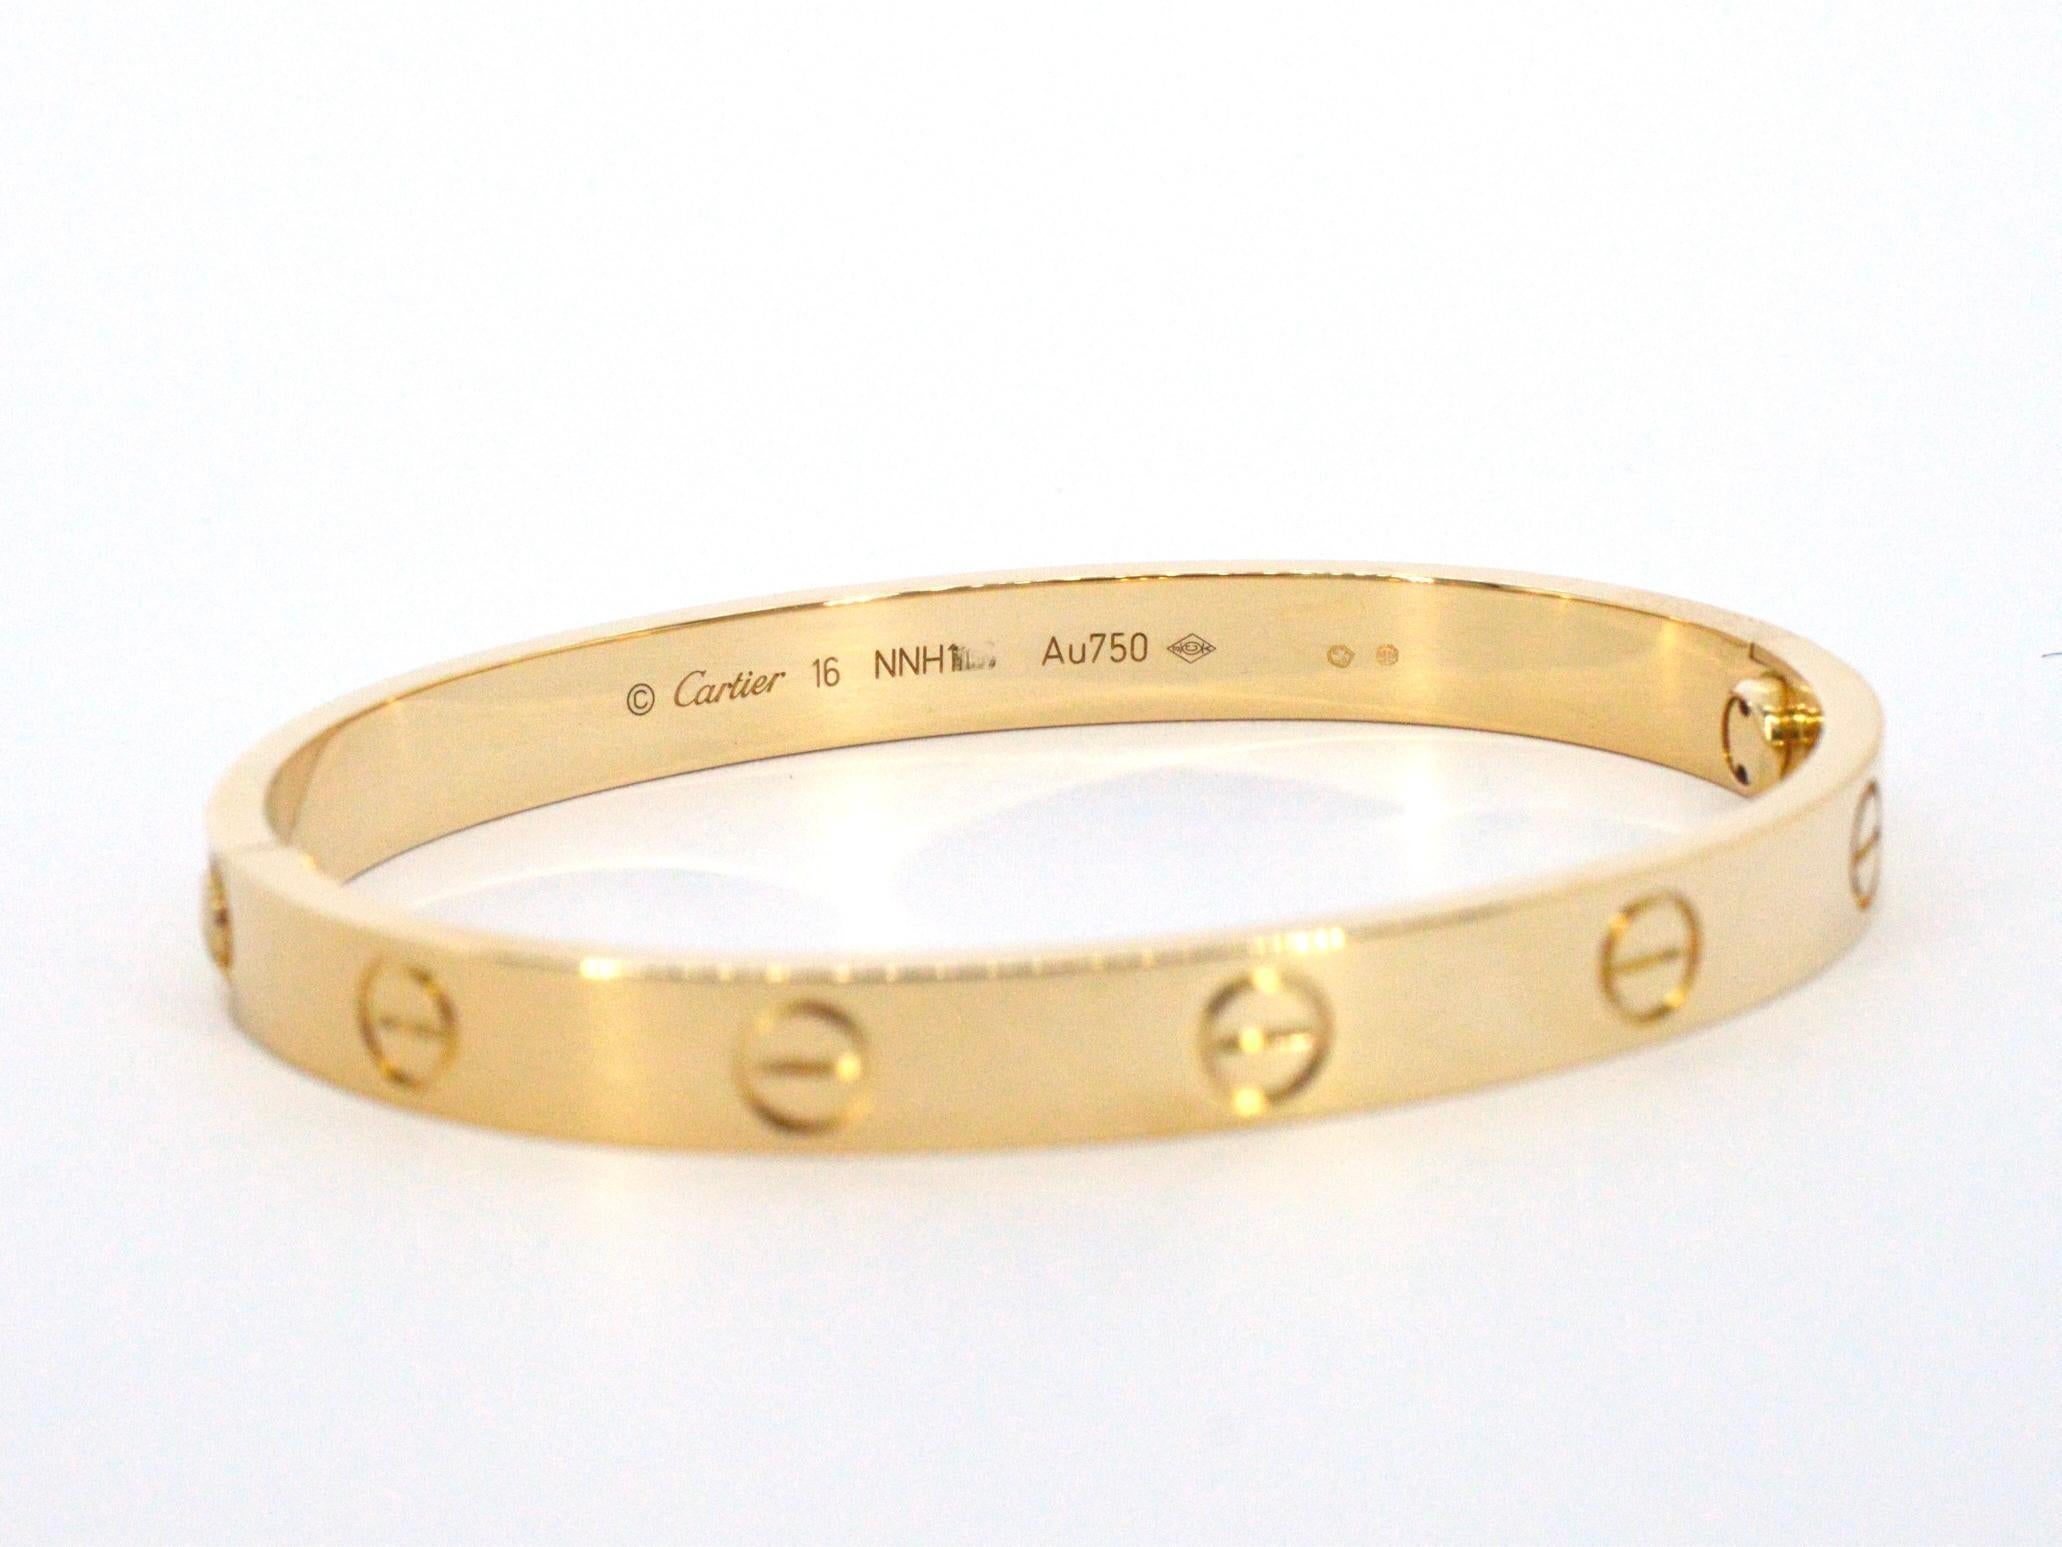 Golden Cartier LOVE Bracelet For Sale 4